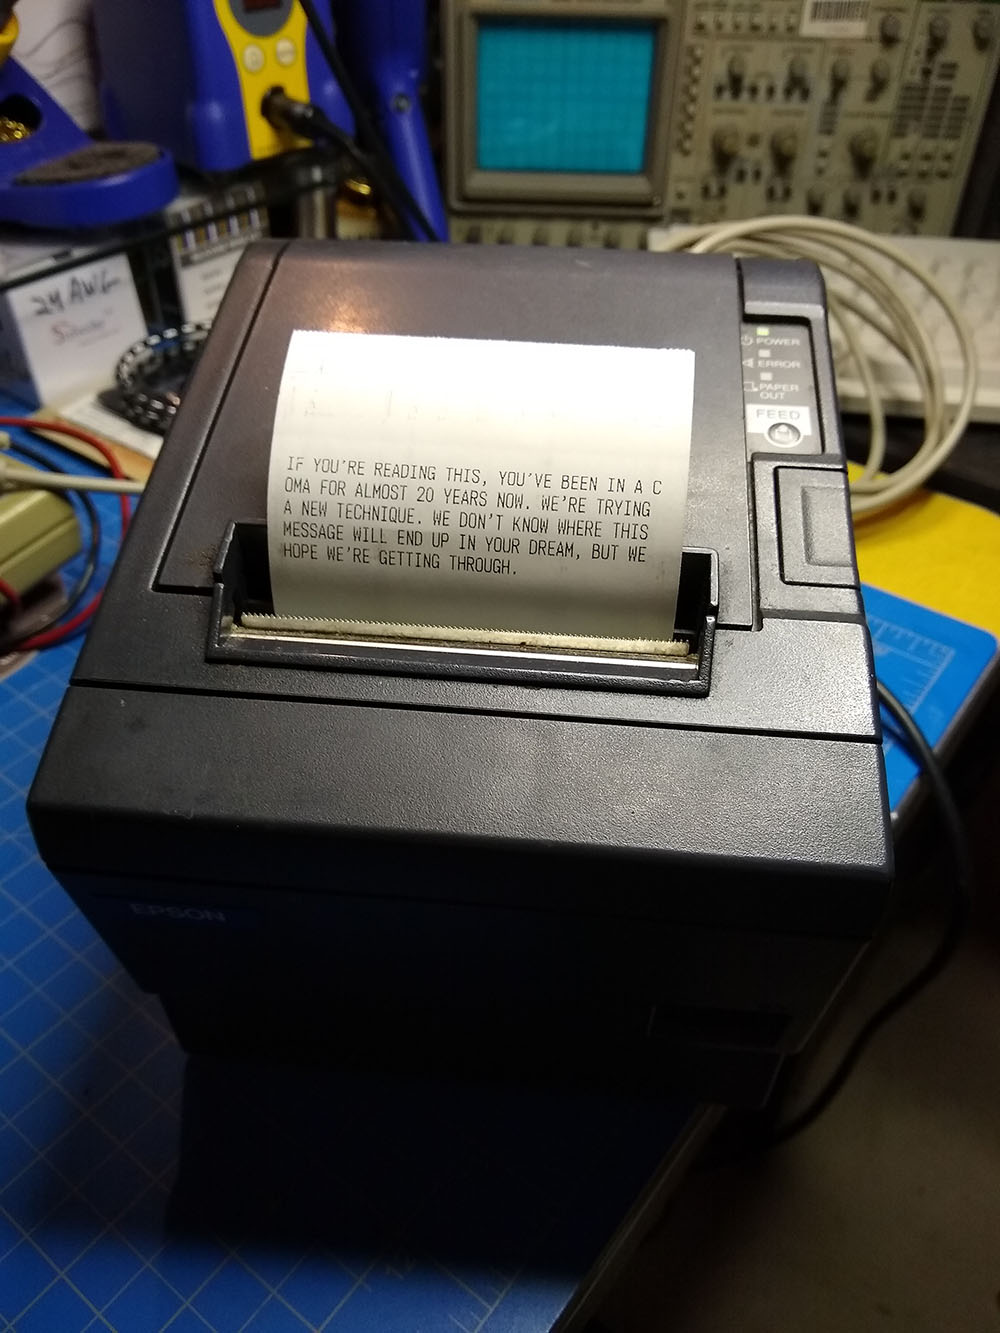 Testing the printer.